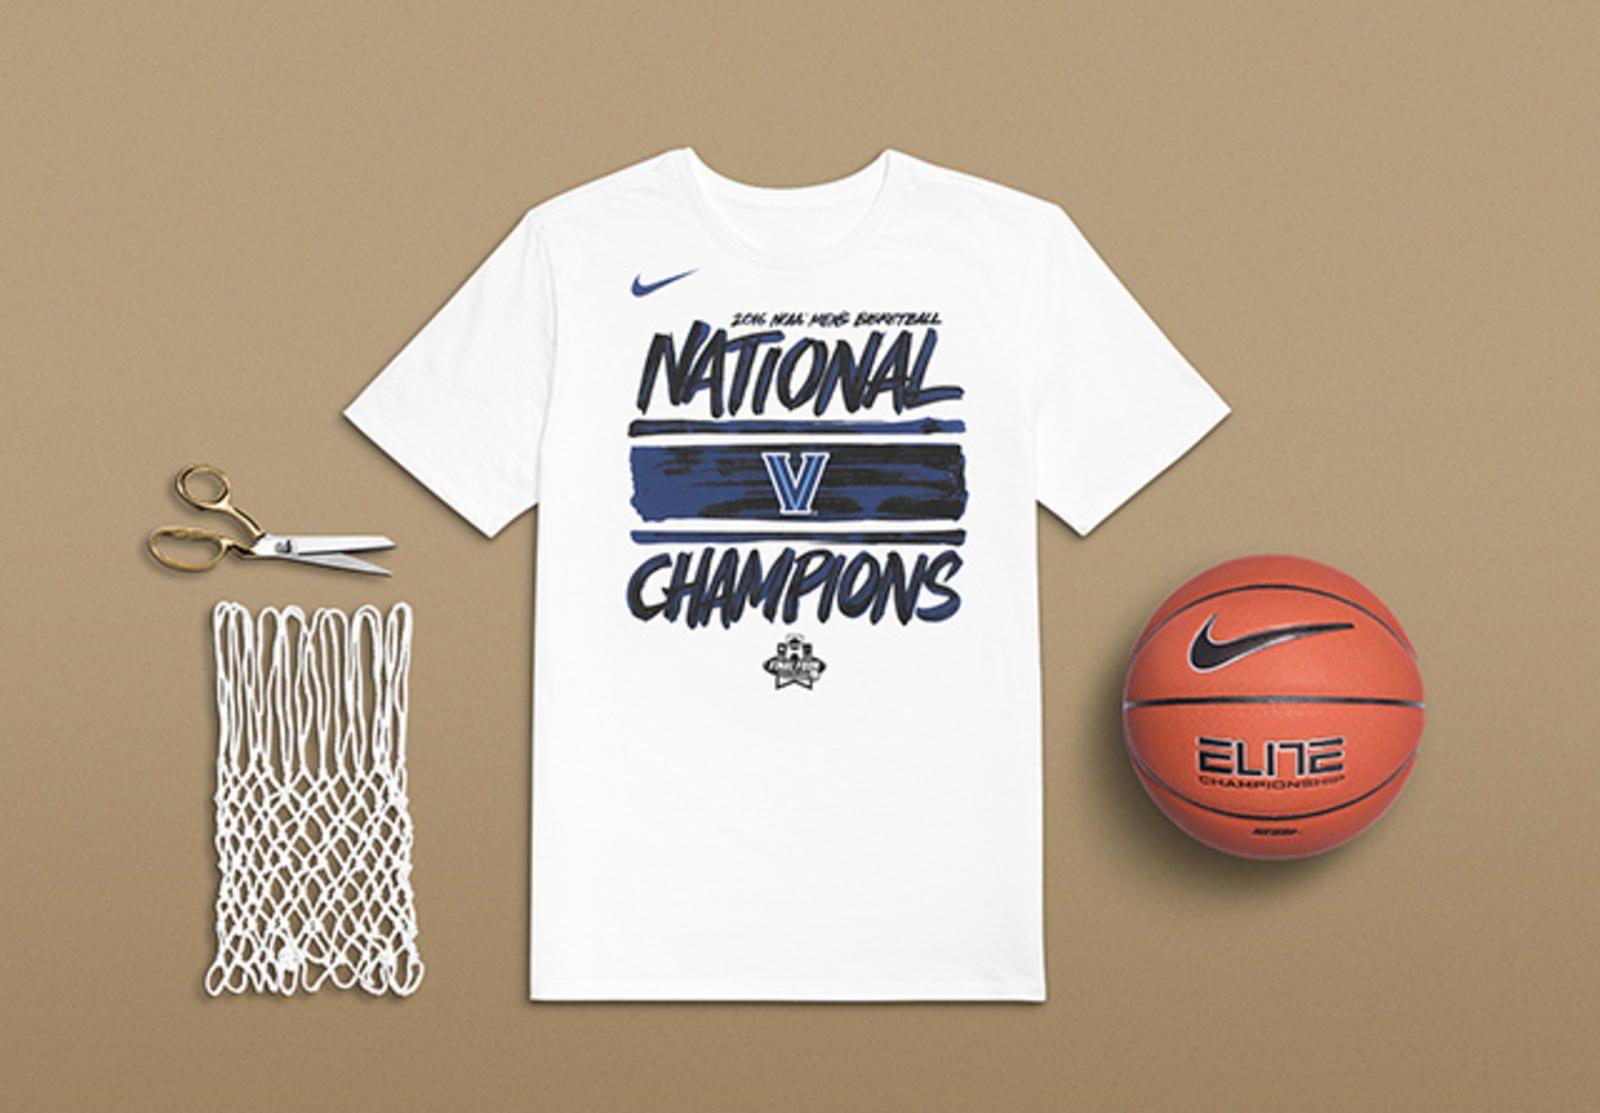 Nike Champion Logo - Nike Celebrates Villanova University's National Championship Win